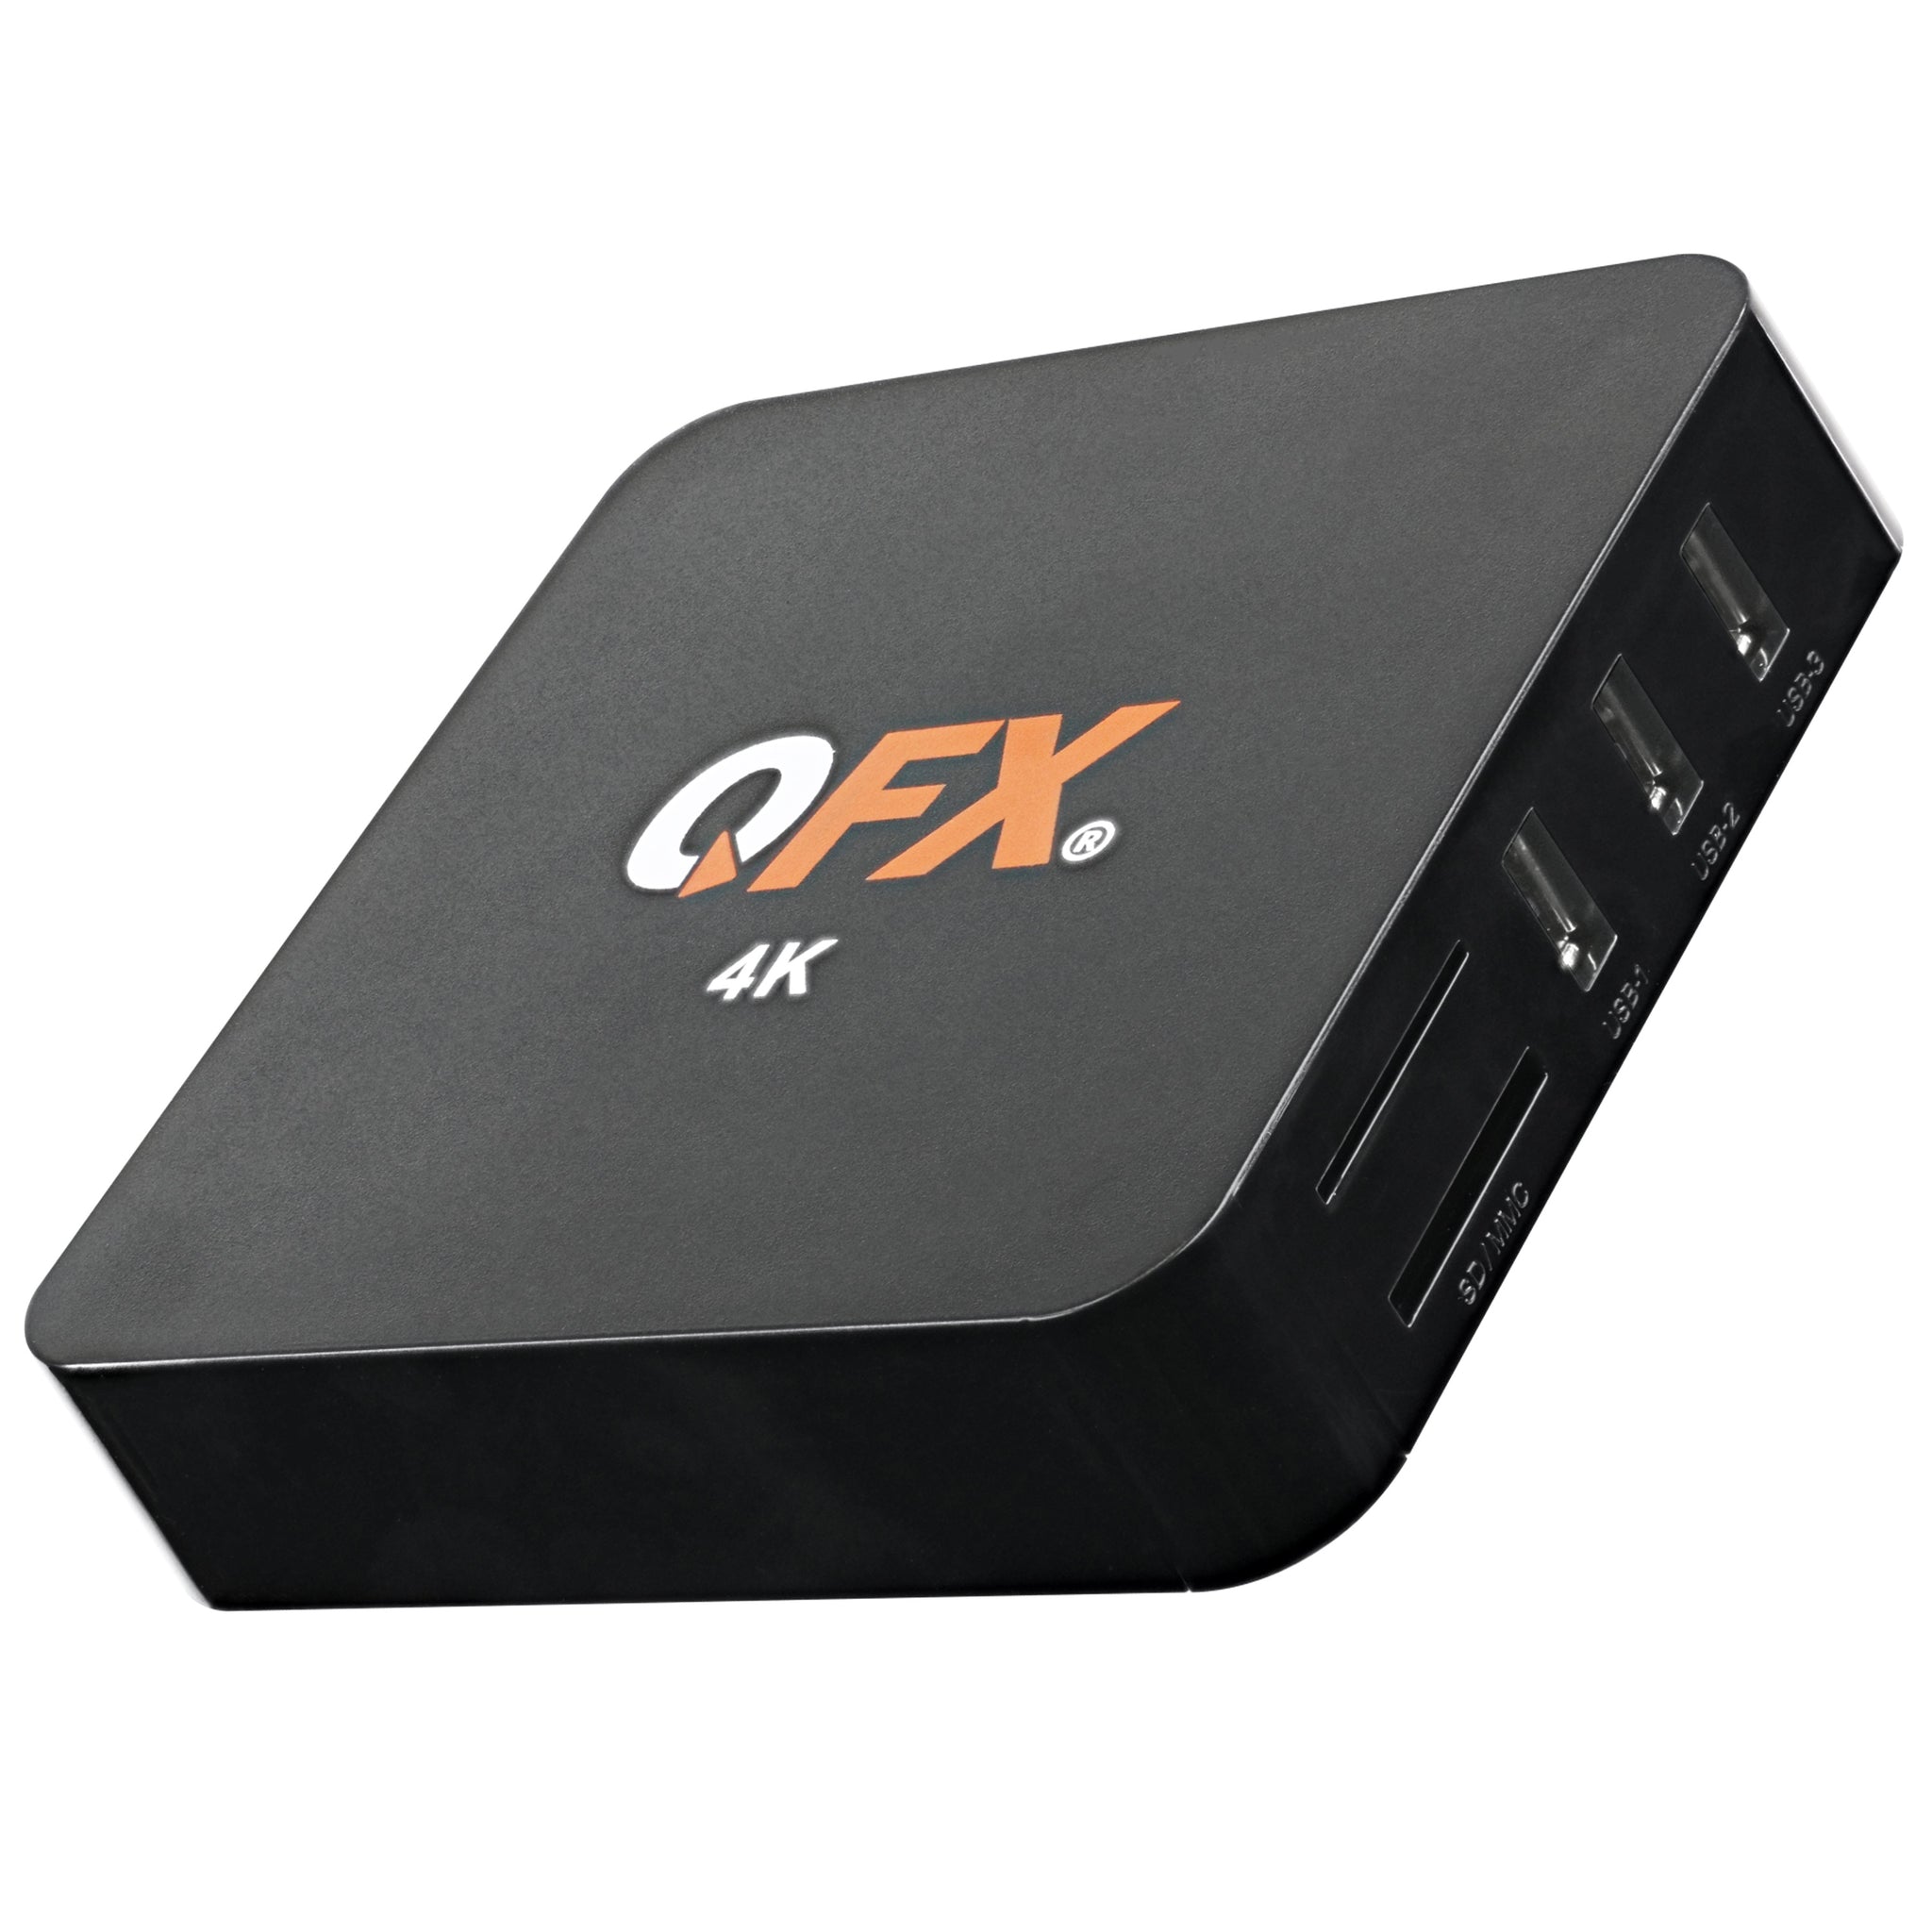 QFX Android TV Box – Amazing Electronics